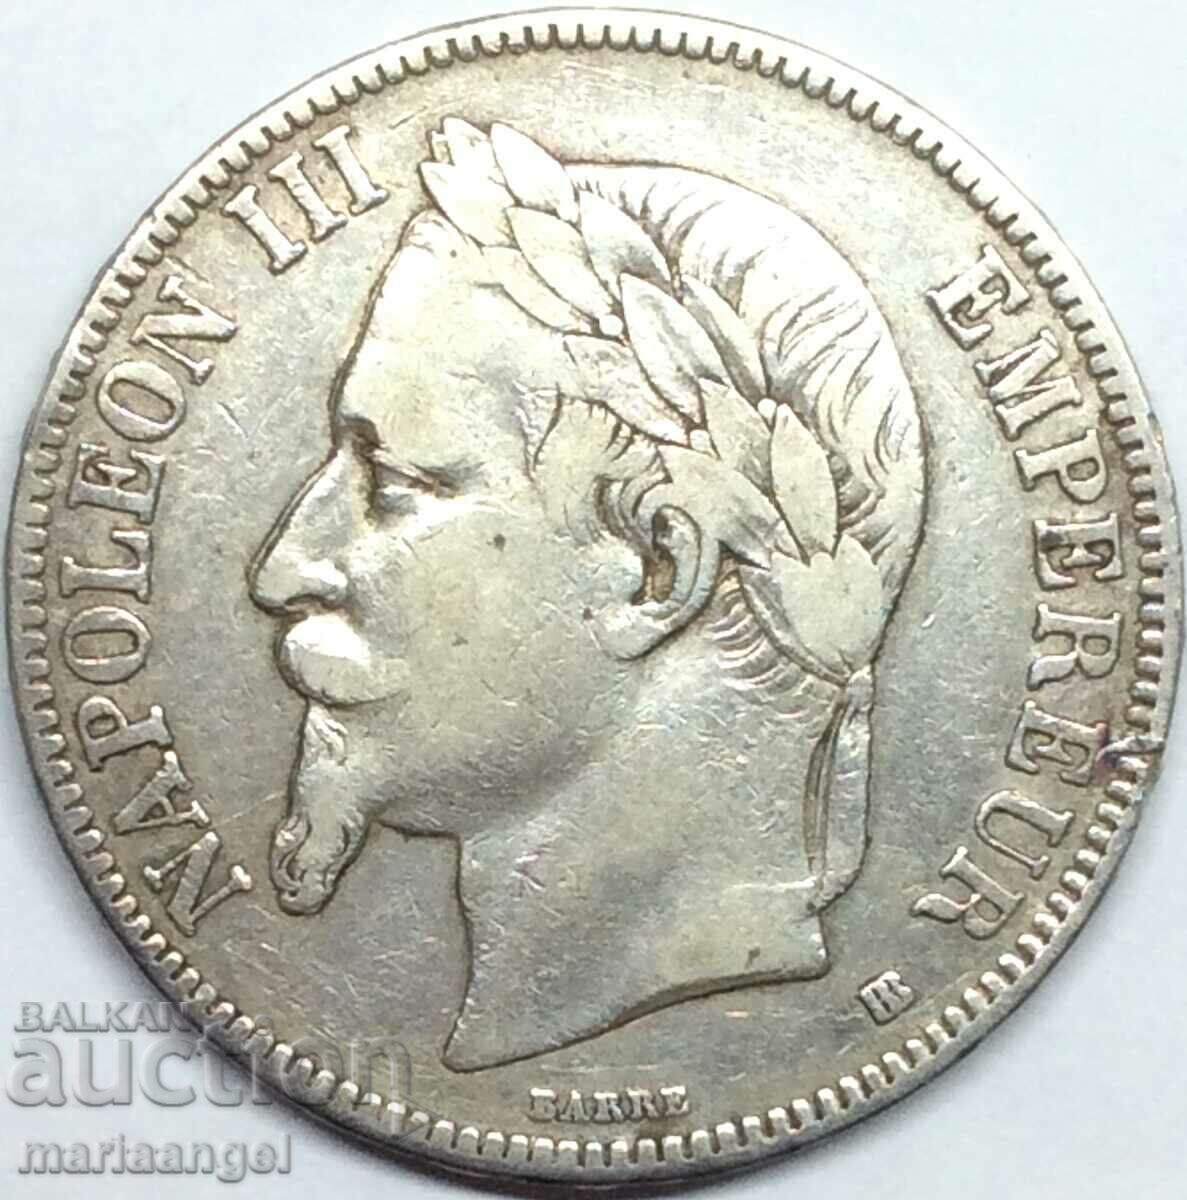 5 francs 1868 France Napoleon III thaler 24.79g silver